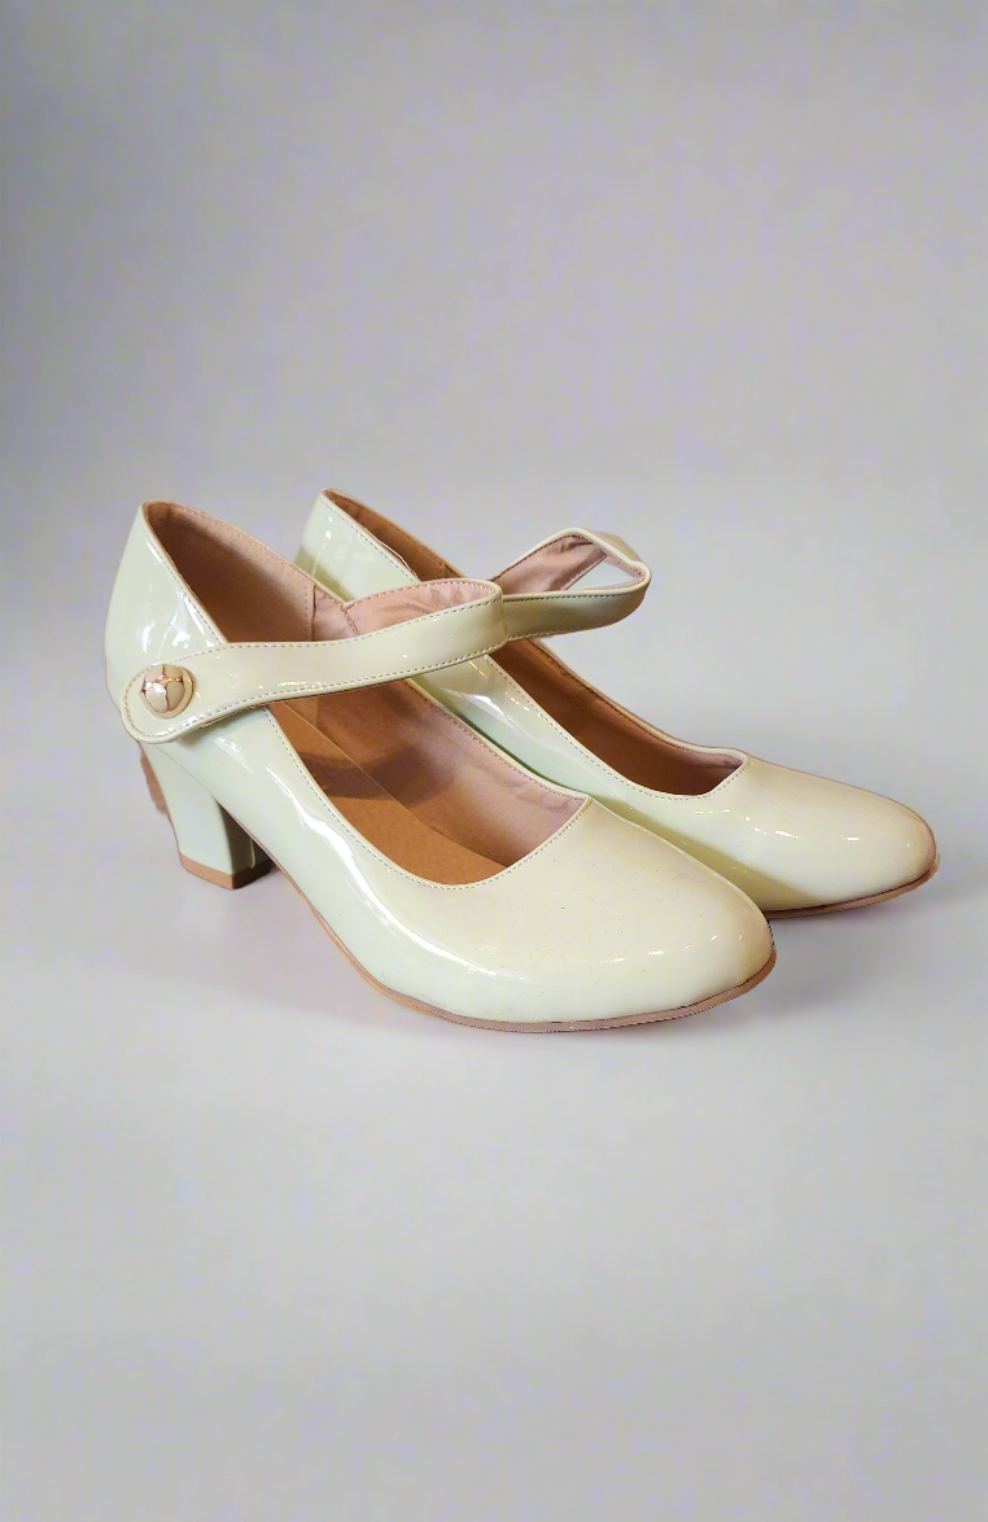 Mint Vintage Inspired Dress Shoes FINAL SALE